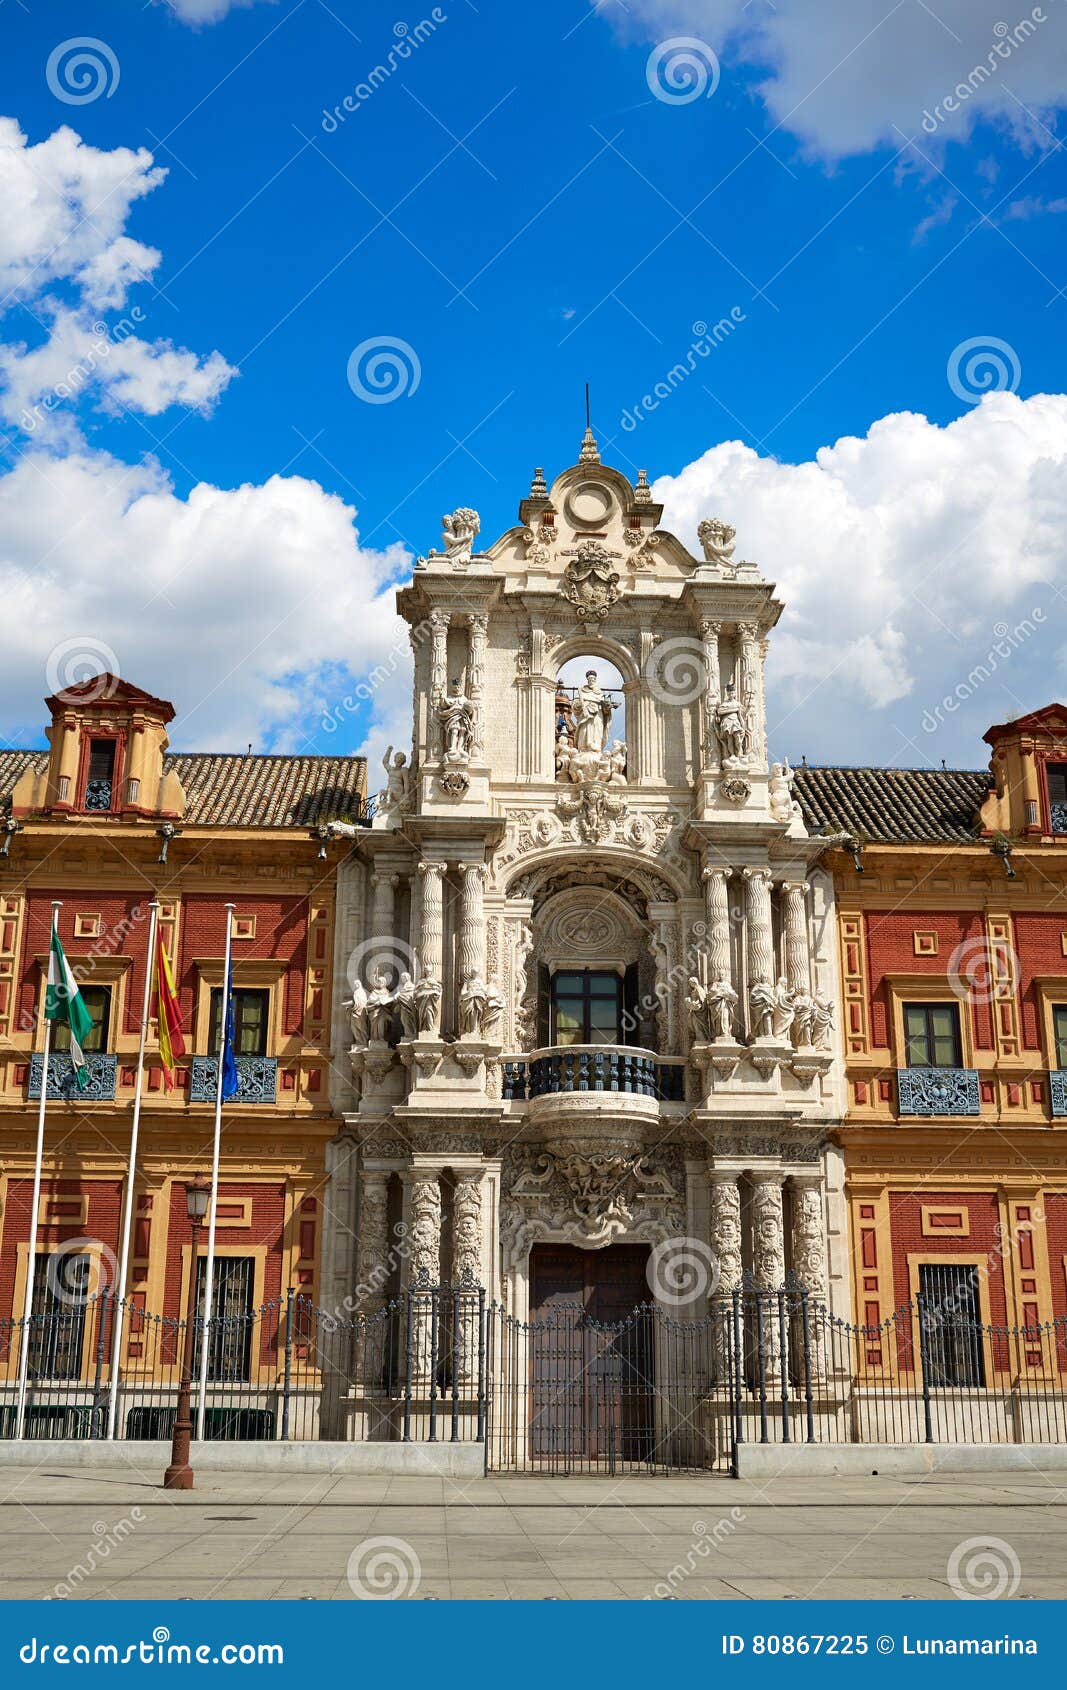 seville palacio san telmo in andalusia spain